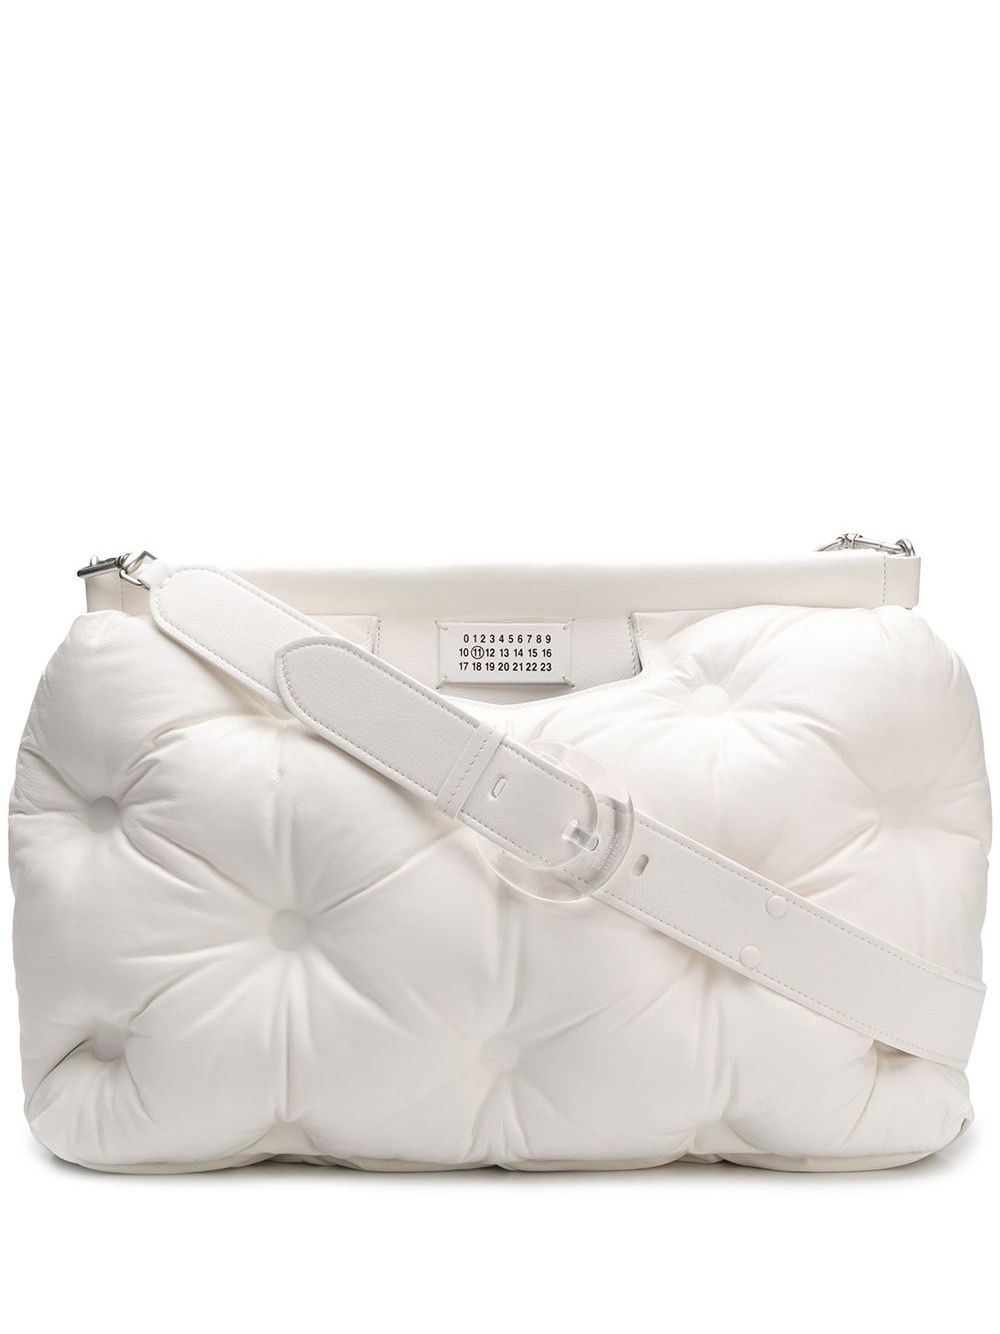 Pillow Purse Trend 2020: Marc Jacobs 